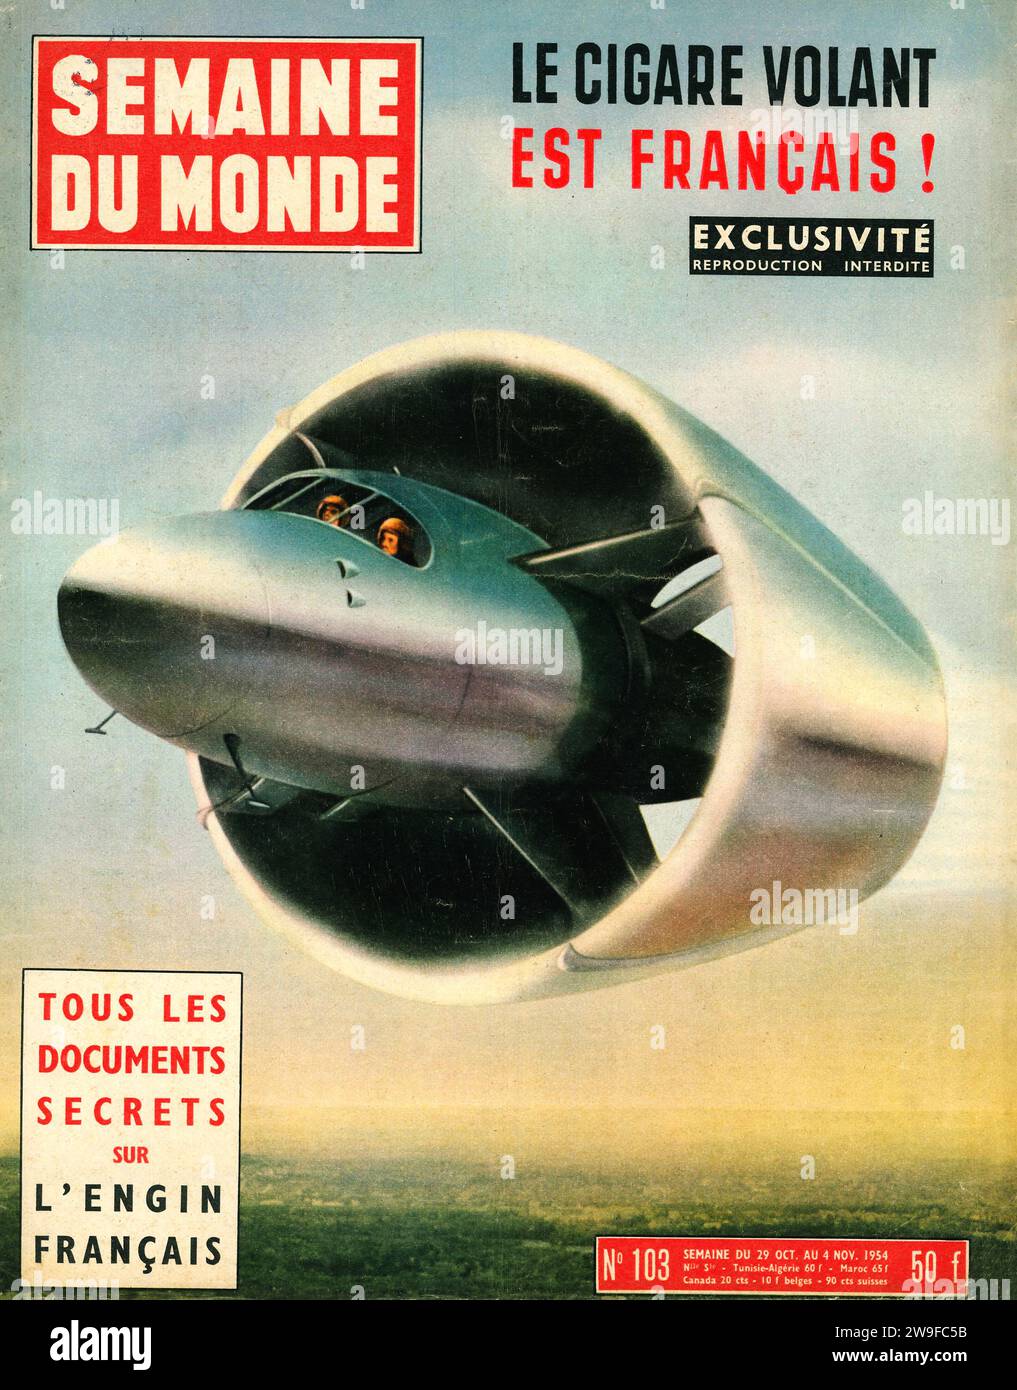 Semaine Du Monde magazine, October 1954 issue cover Stock Photo